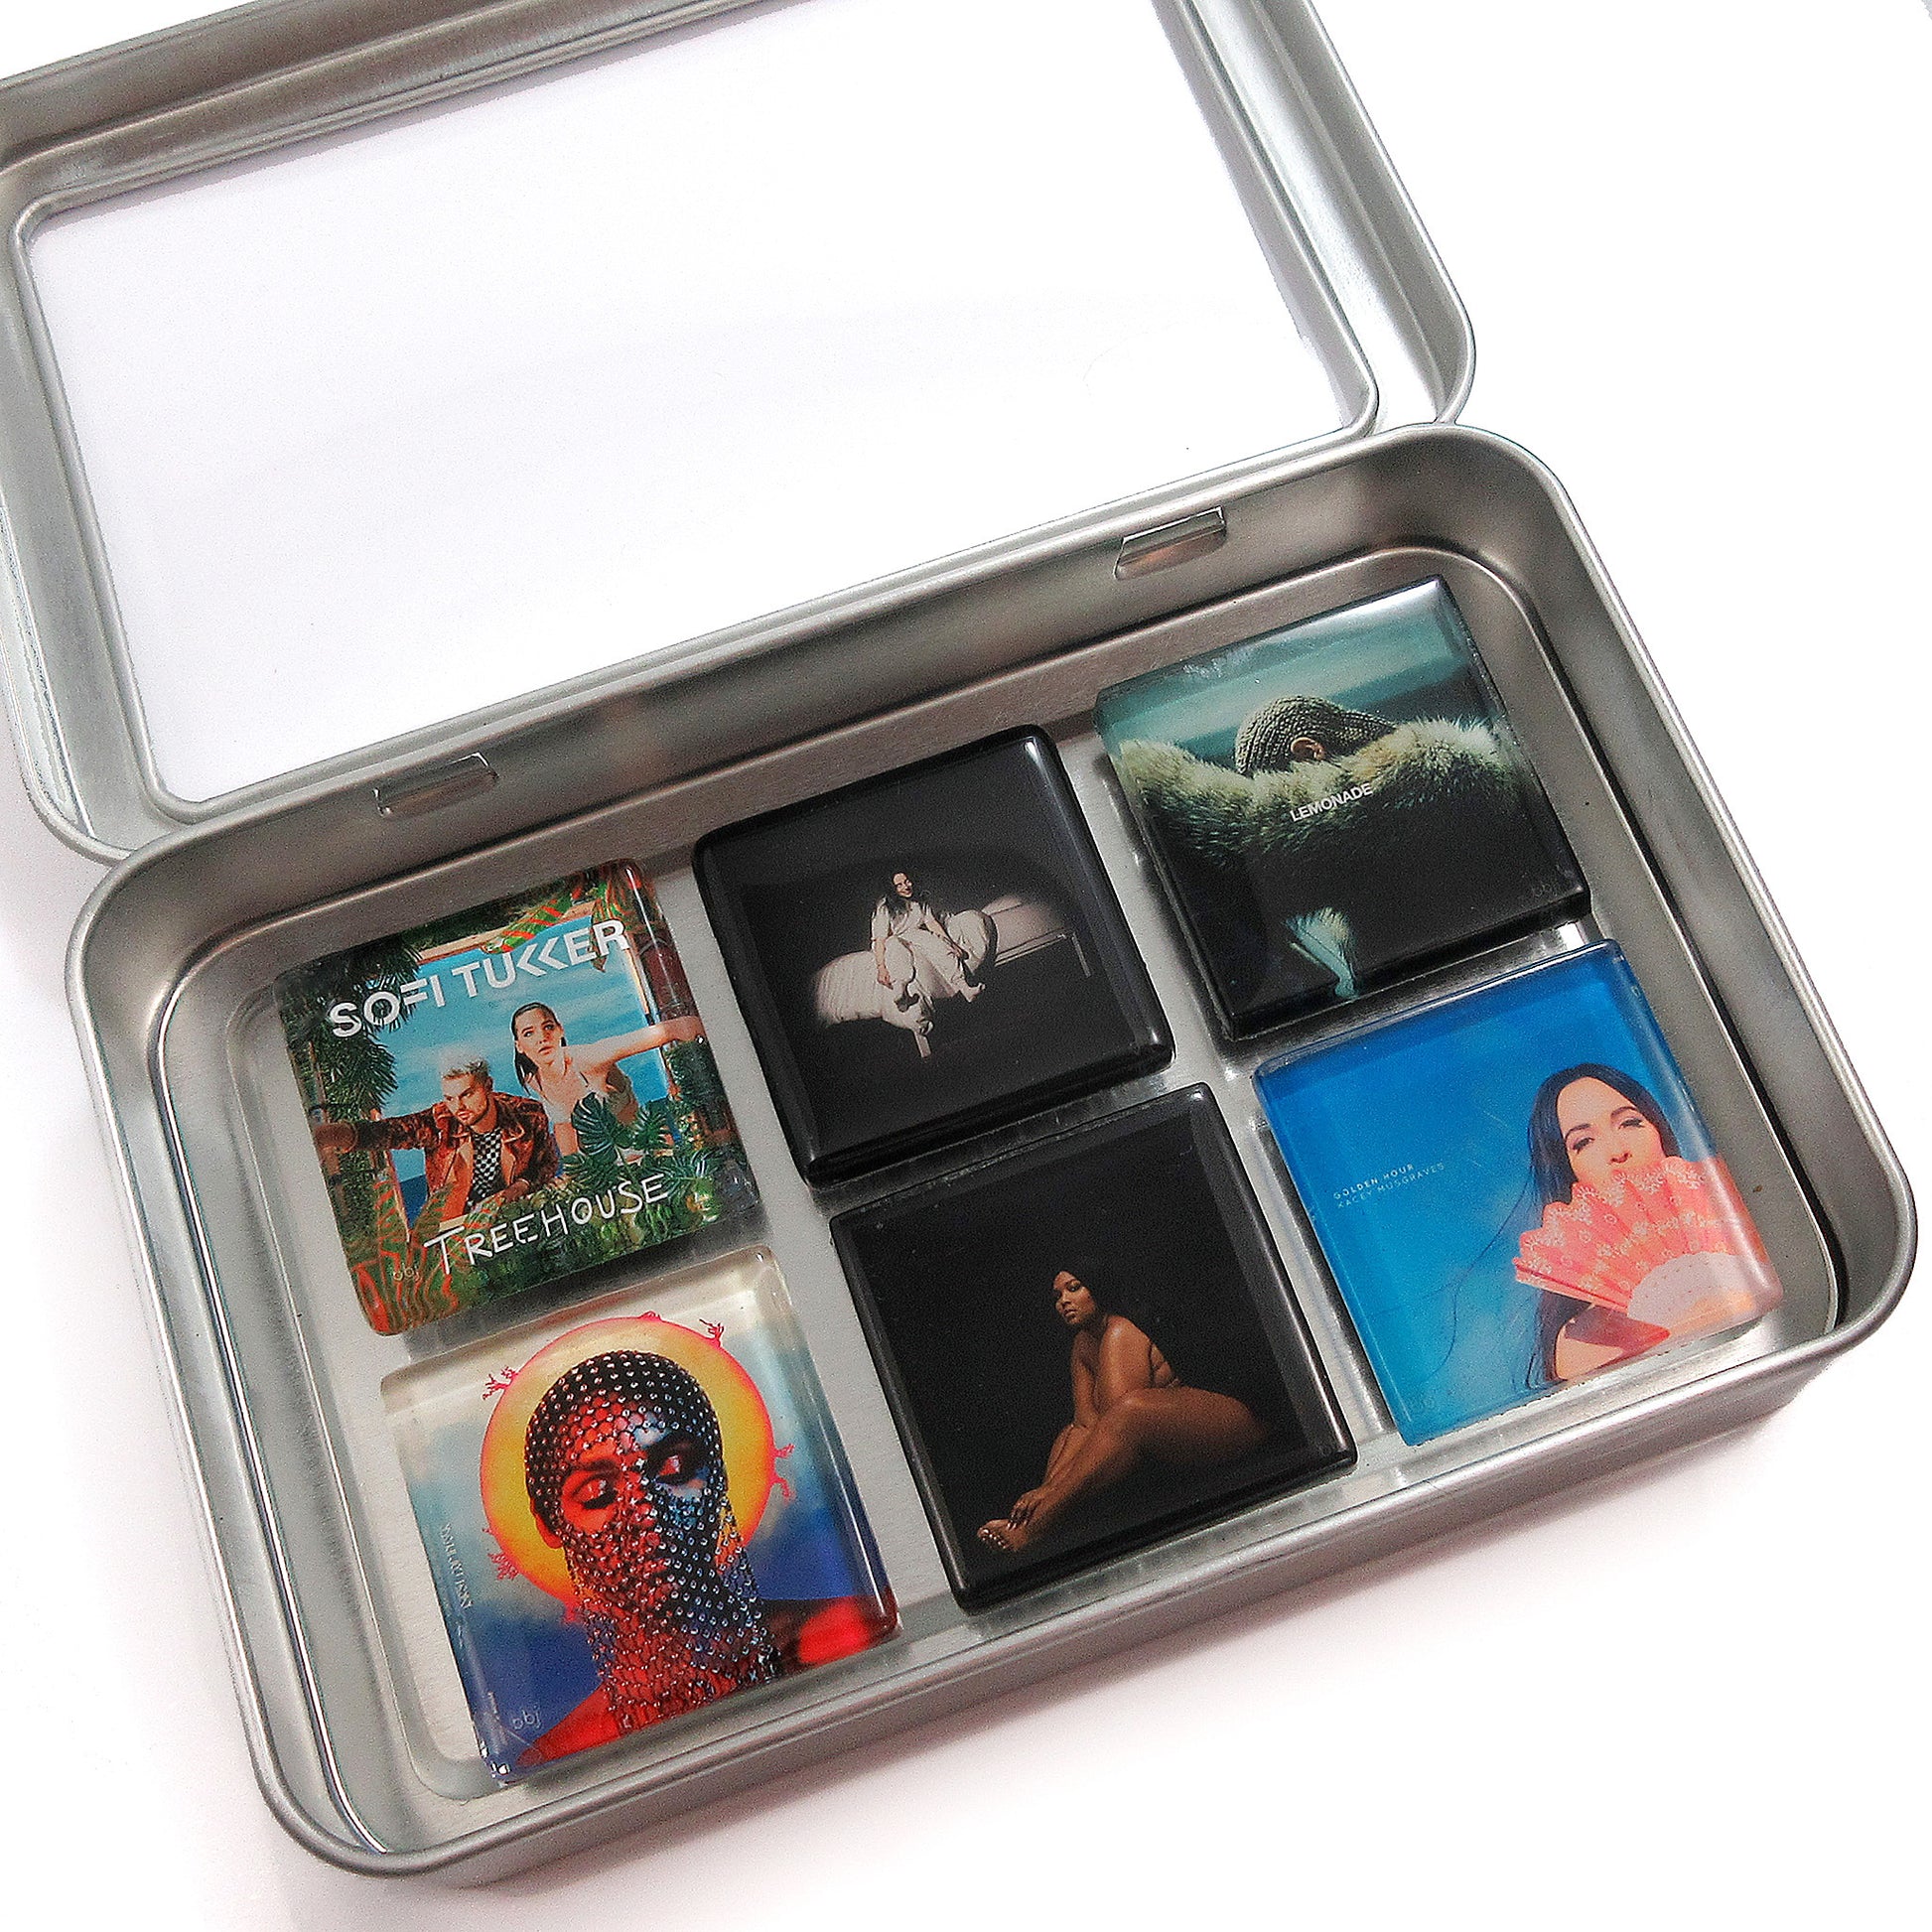 Custom glass album cover magnet of 6 glass magnets in tin set by BBJ